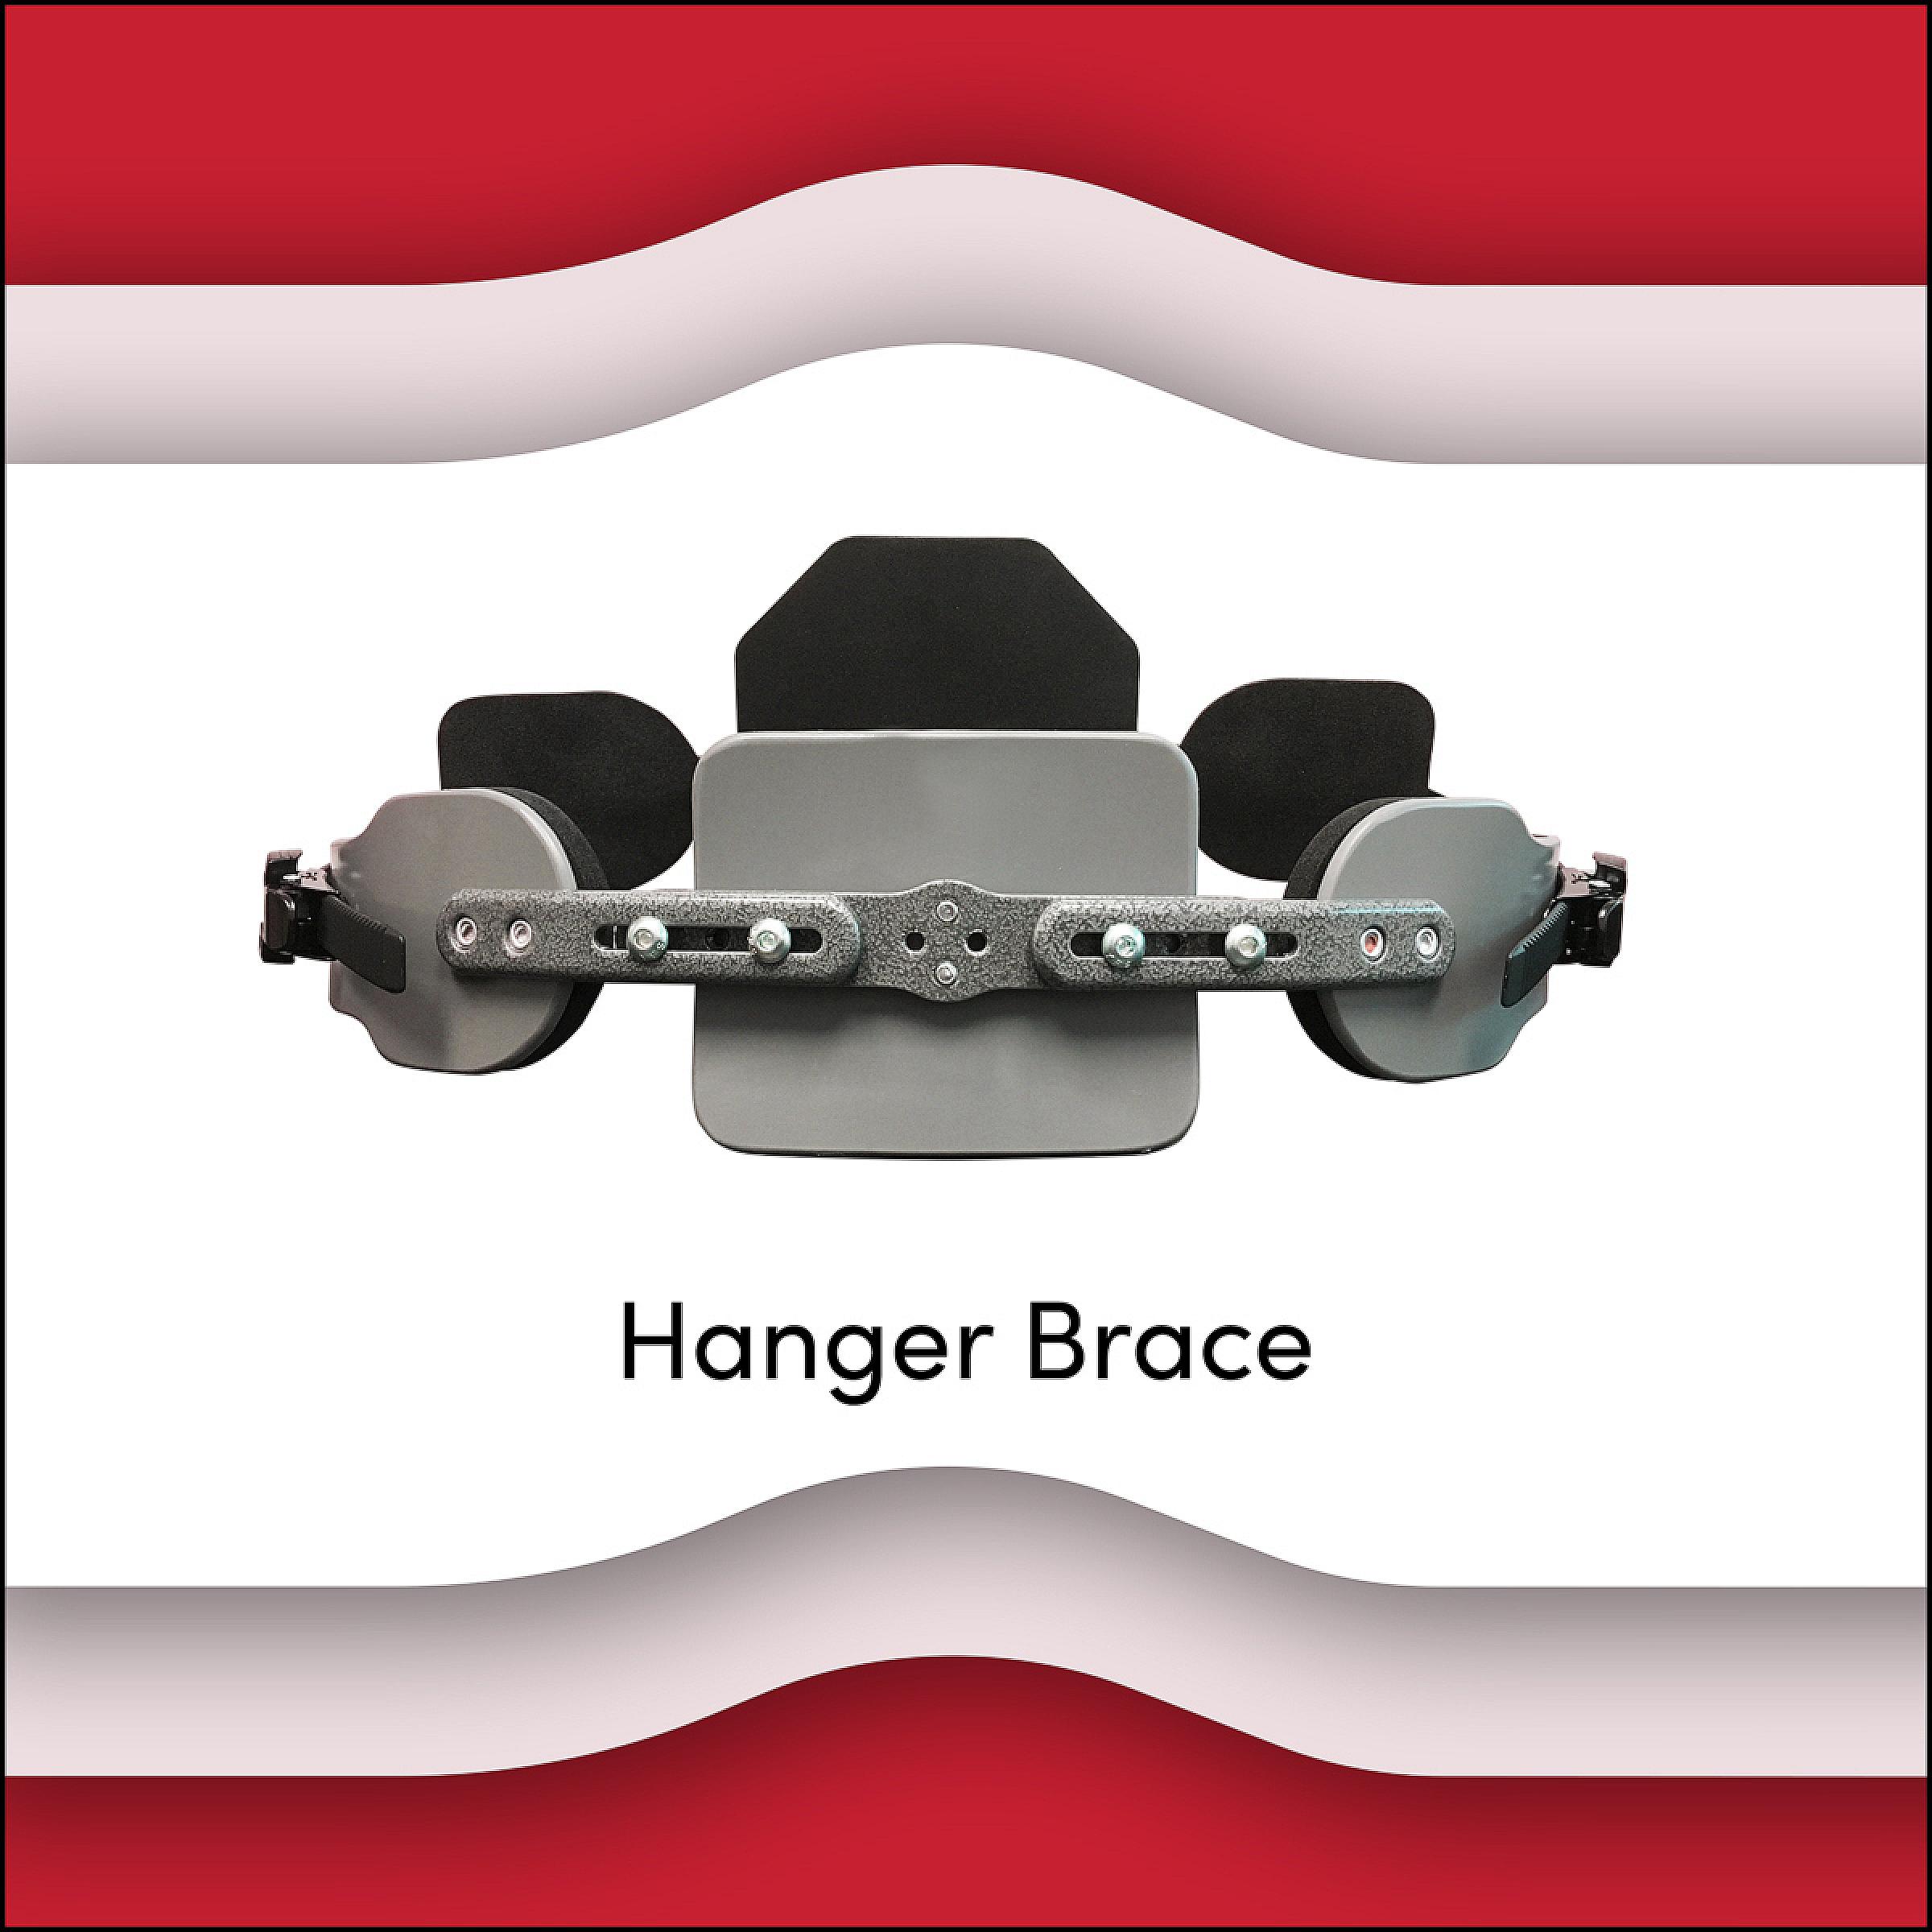 Chest wall deformity, hanger brace illustration